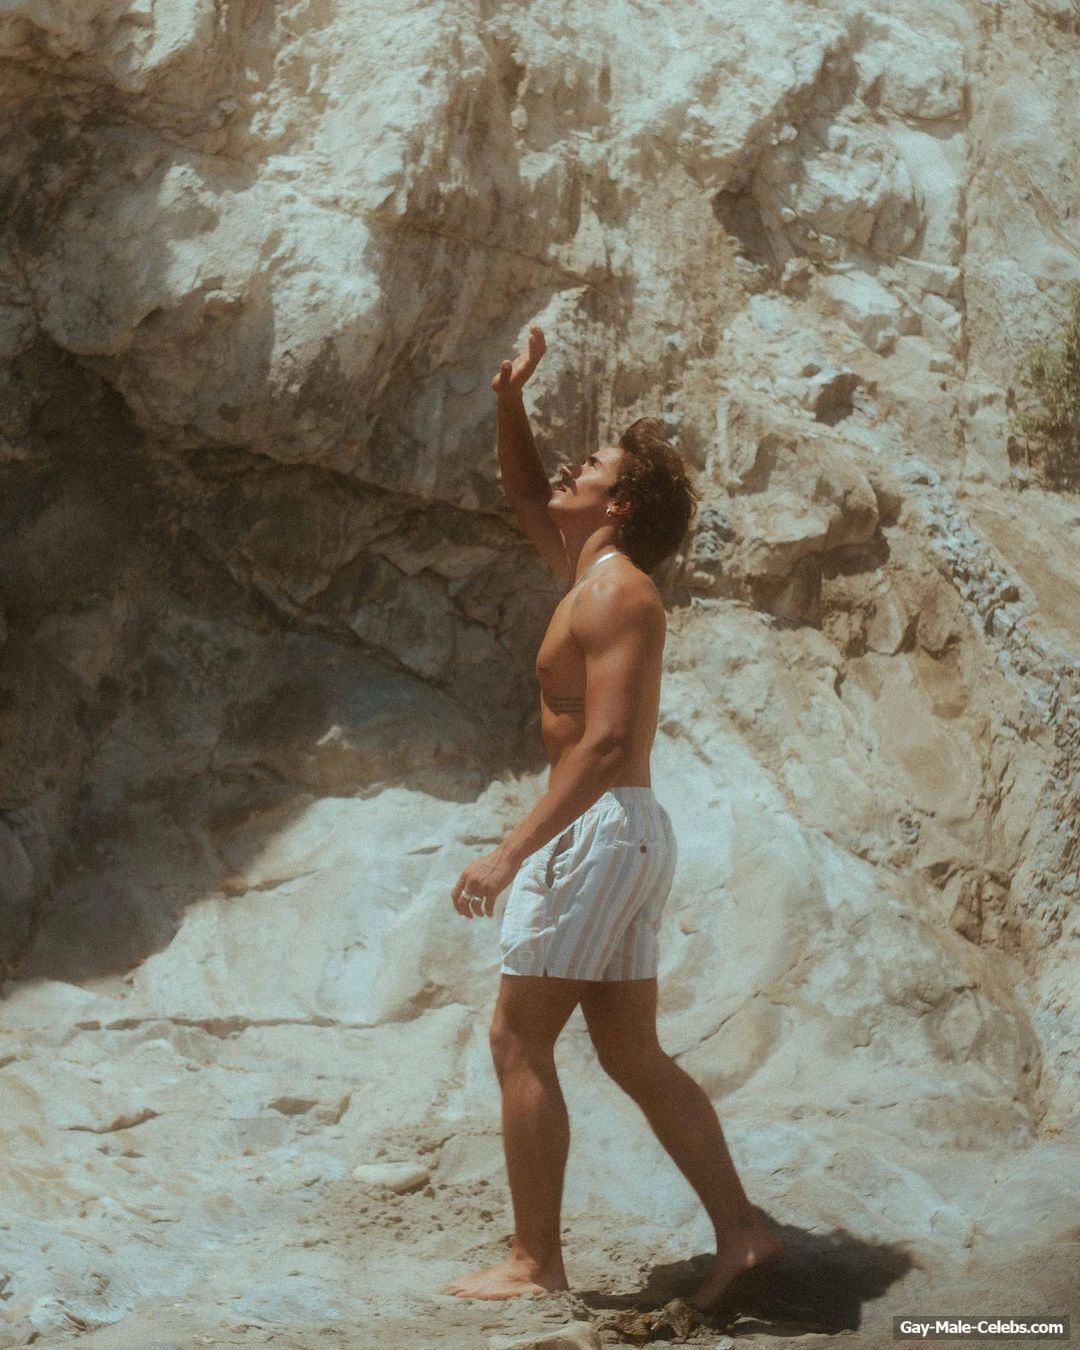 Michael Cimino Posing Shirtless And Sexy For IG